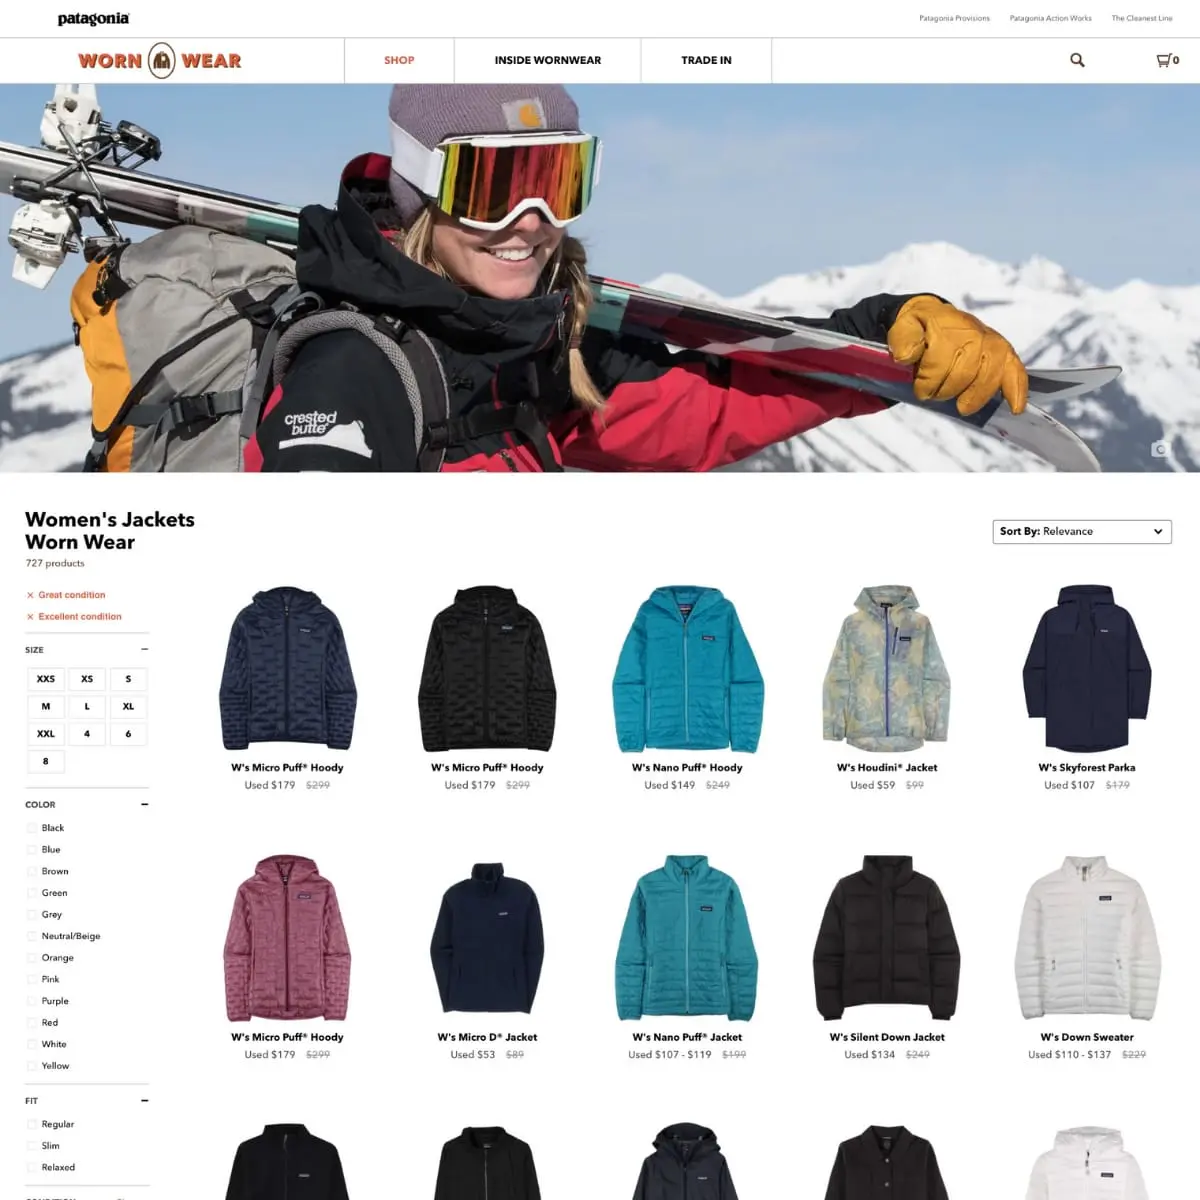 Screen shot of Patagonia worn wear website